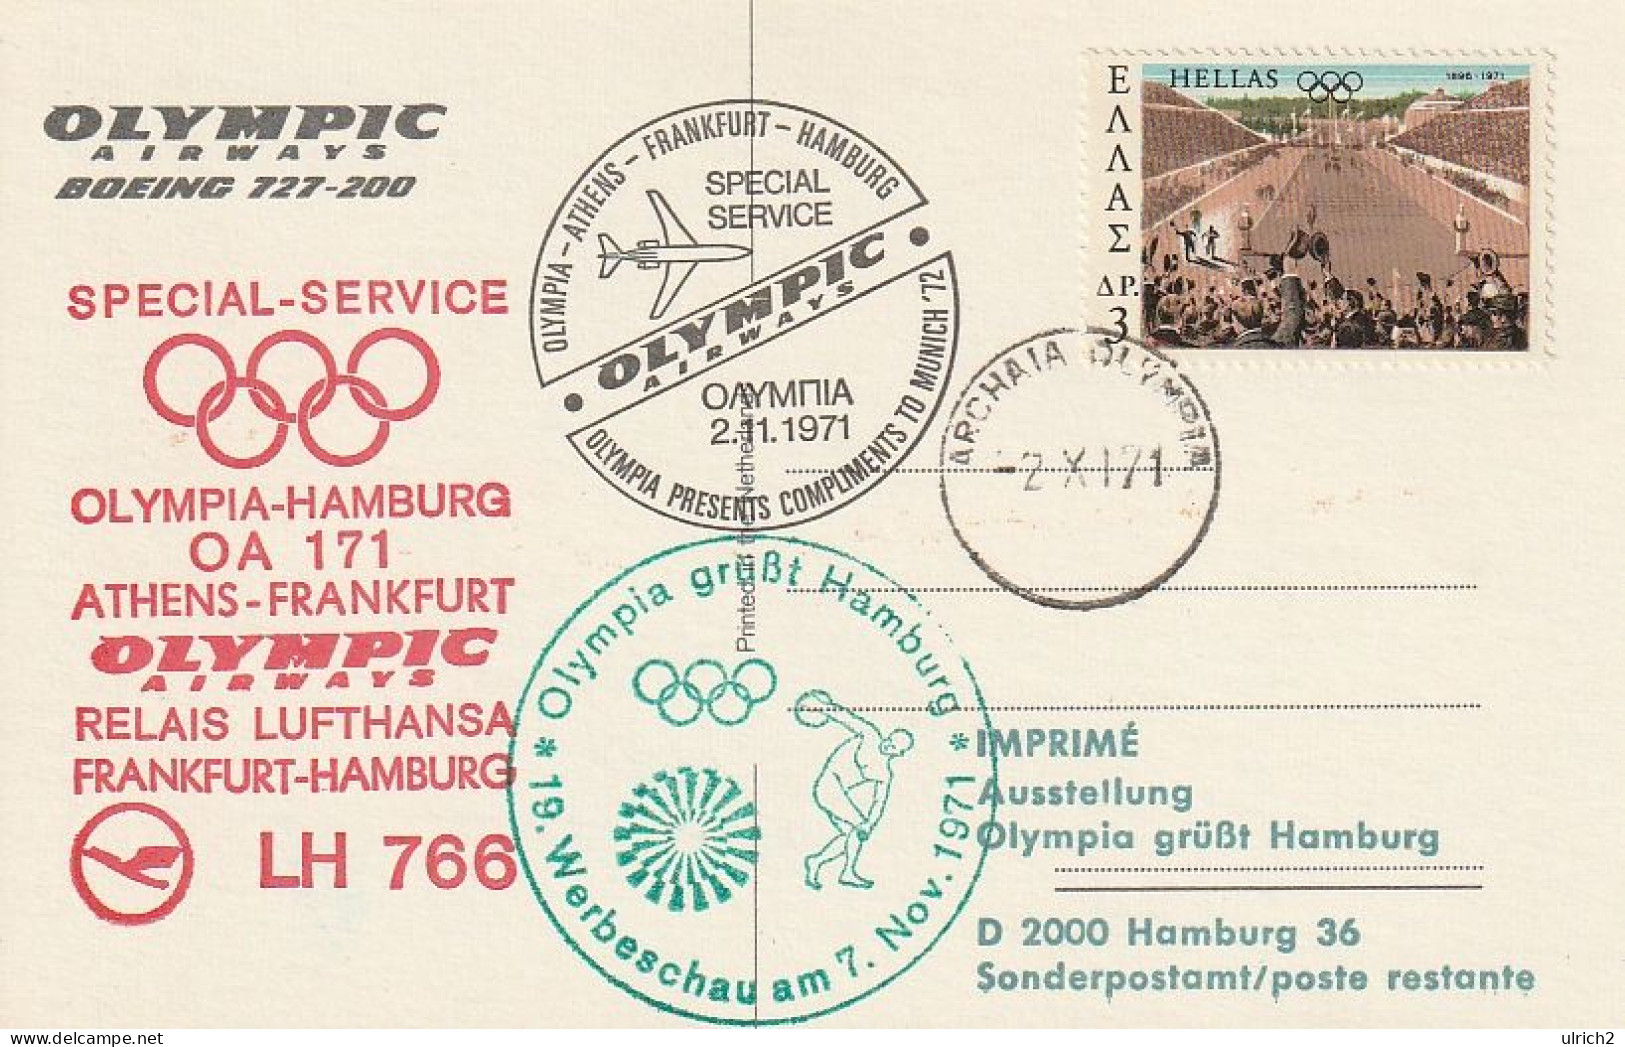 Greece - Olympia Grüßt Hamburg - Olympic Special Service Athens-Frankfurt LH 766 - 1971  (67177) - Covers & Documents